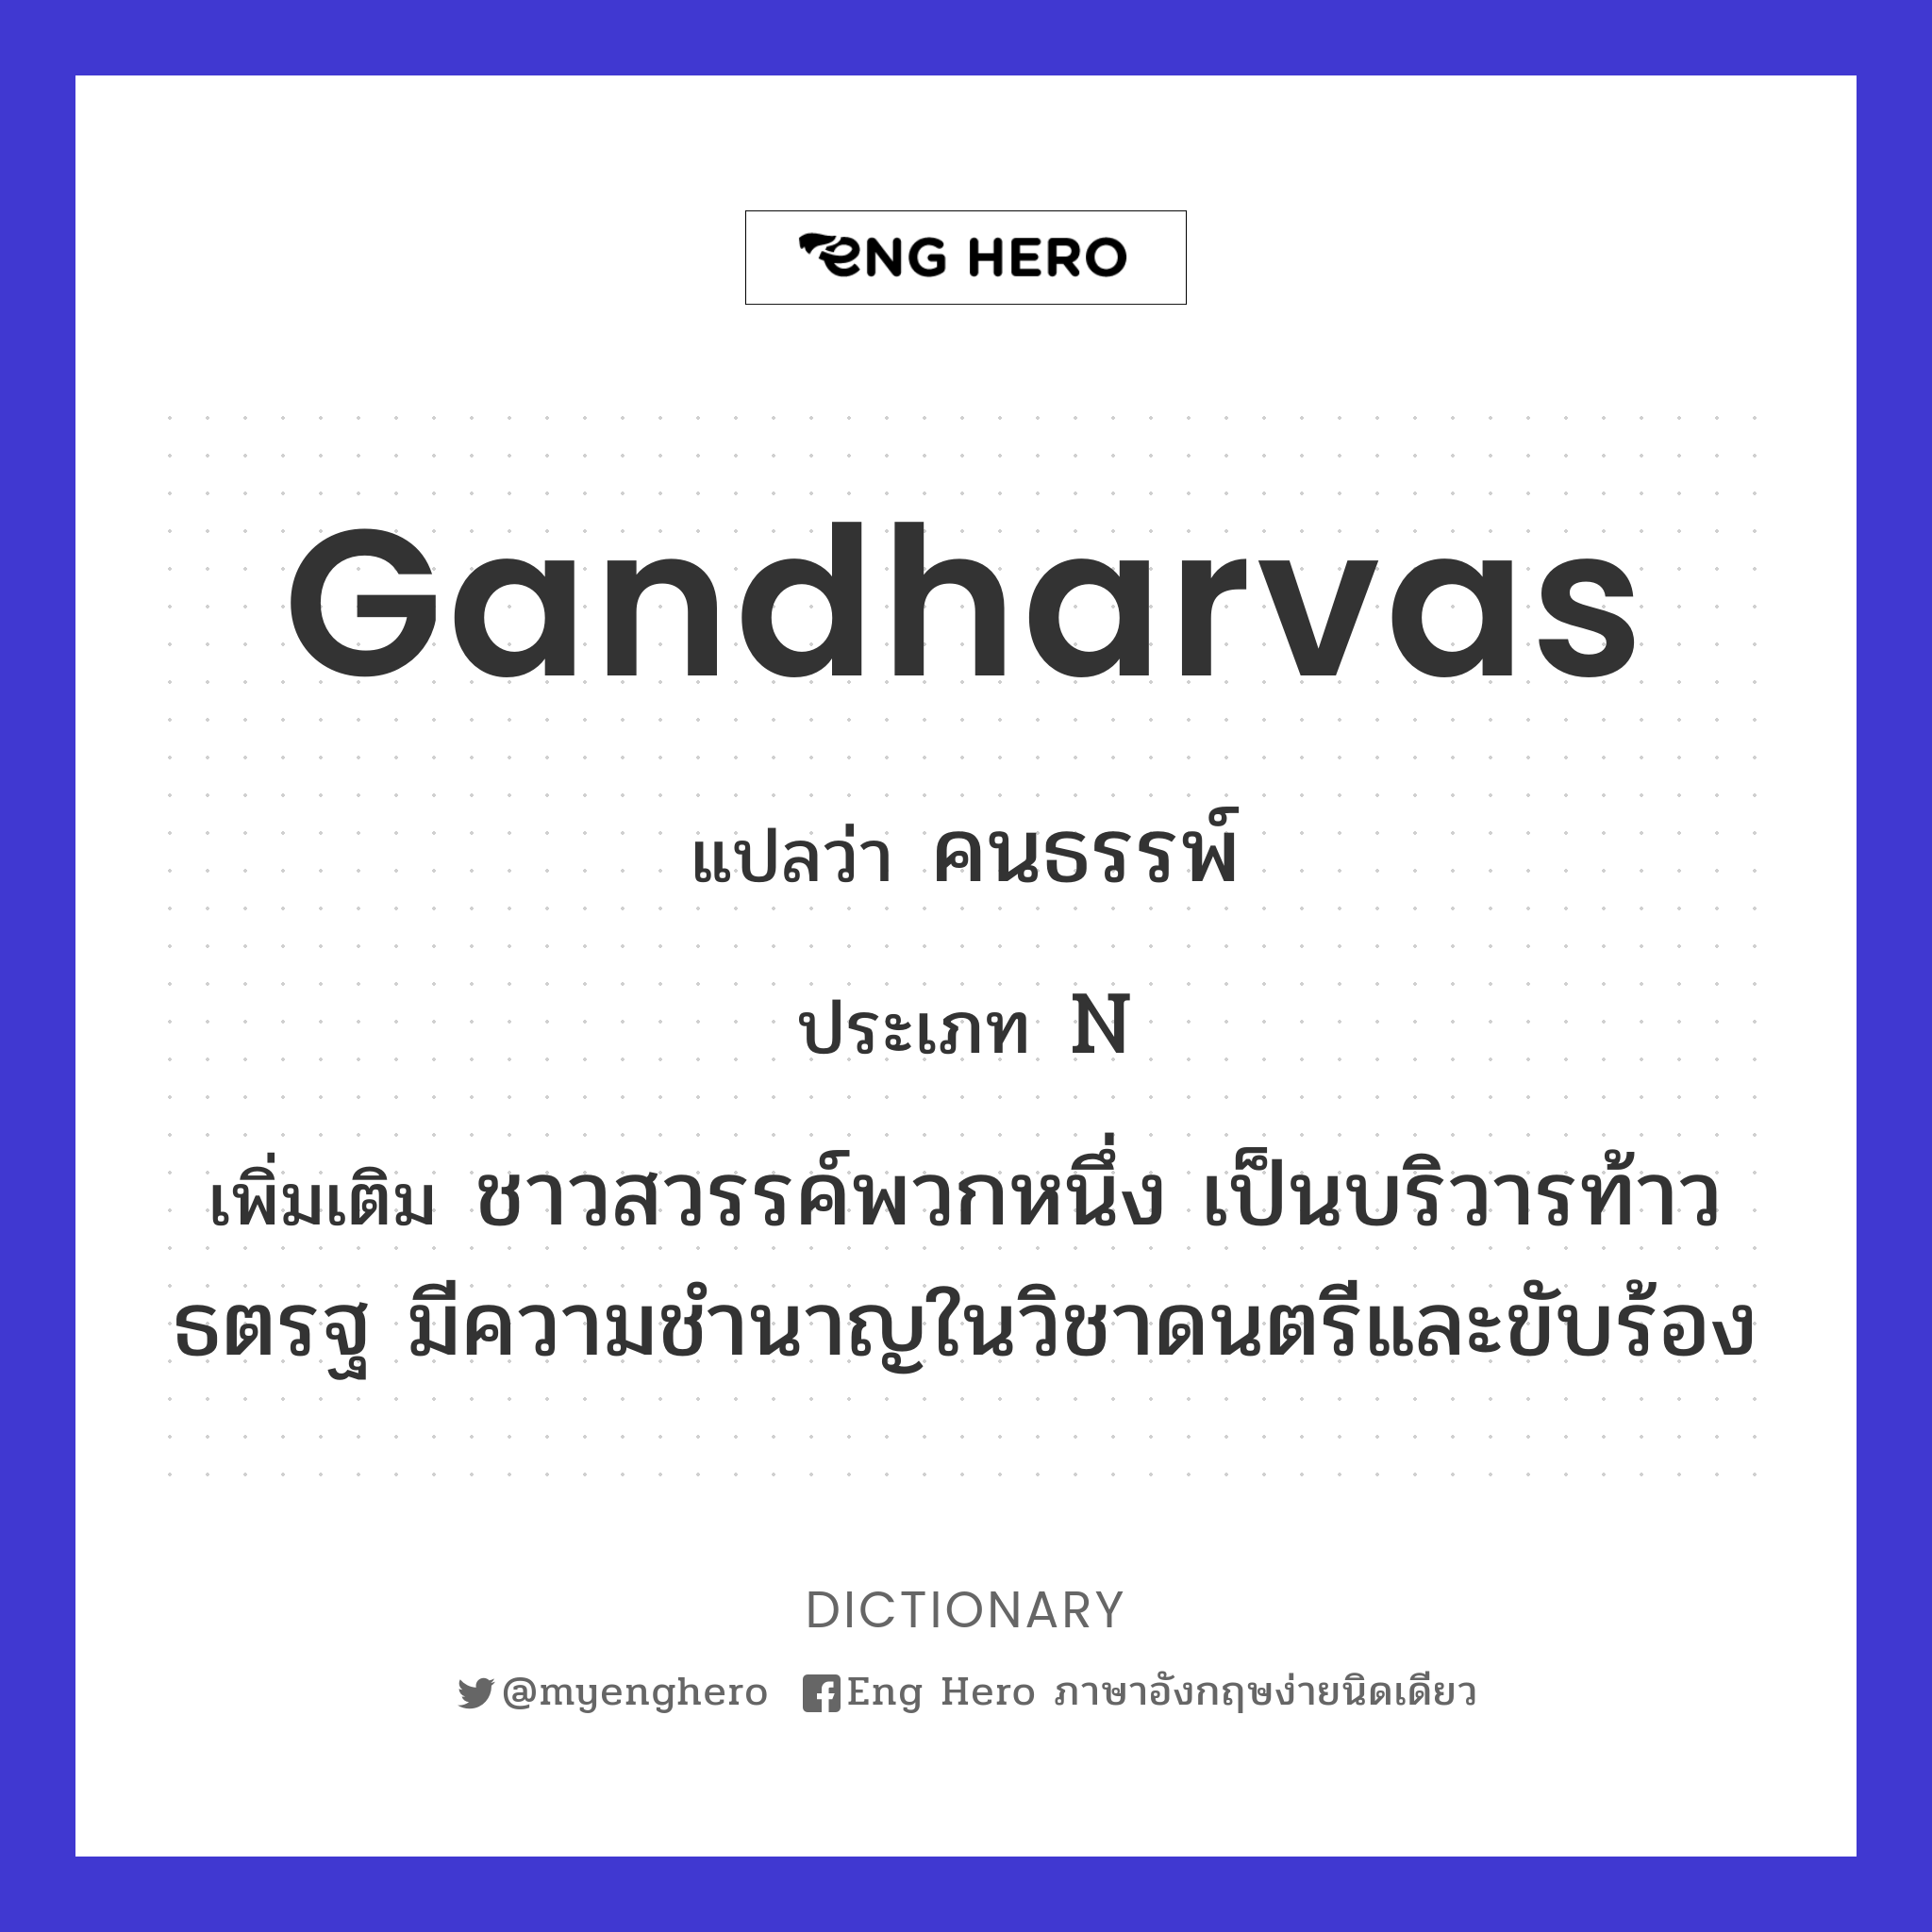 Gandharvas